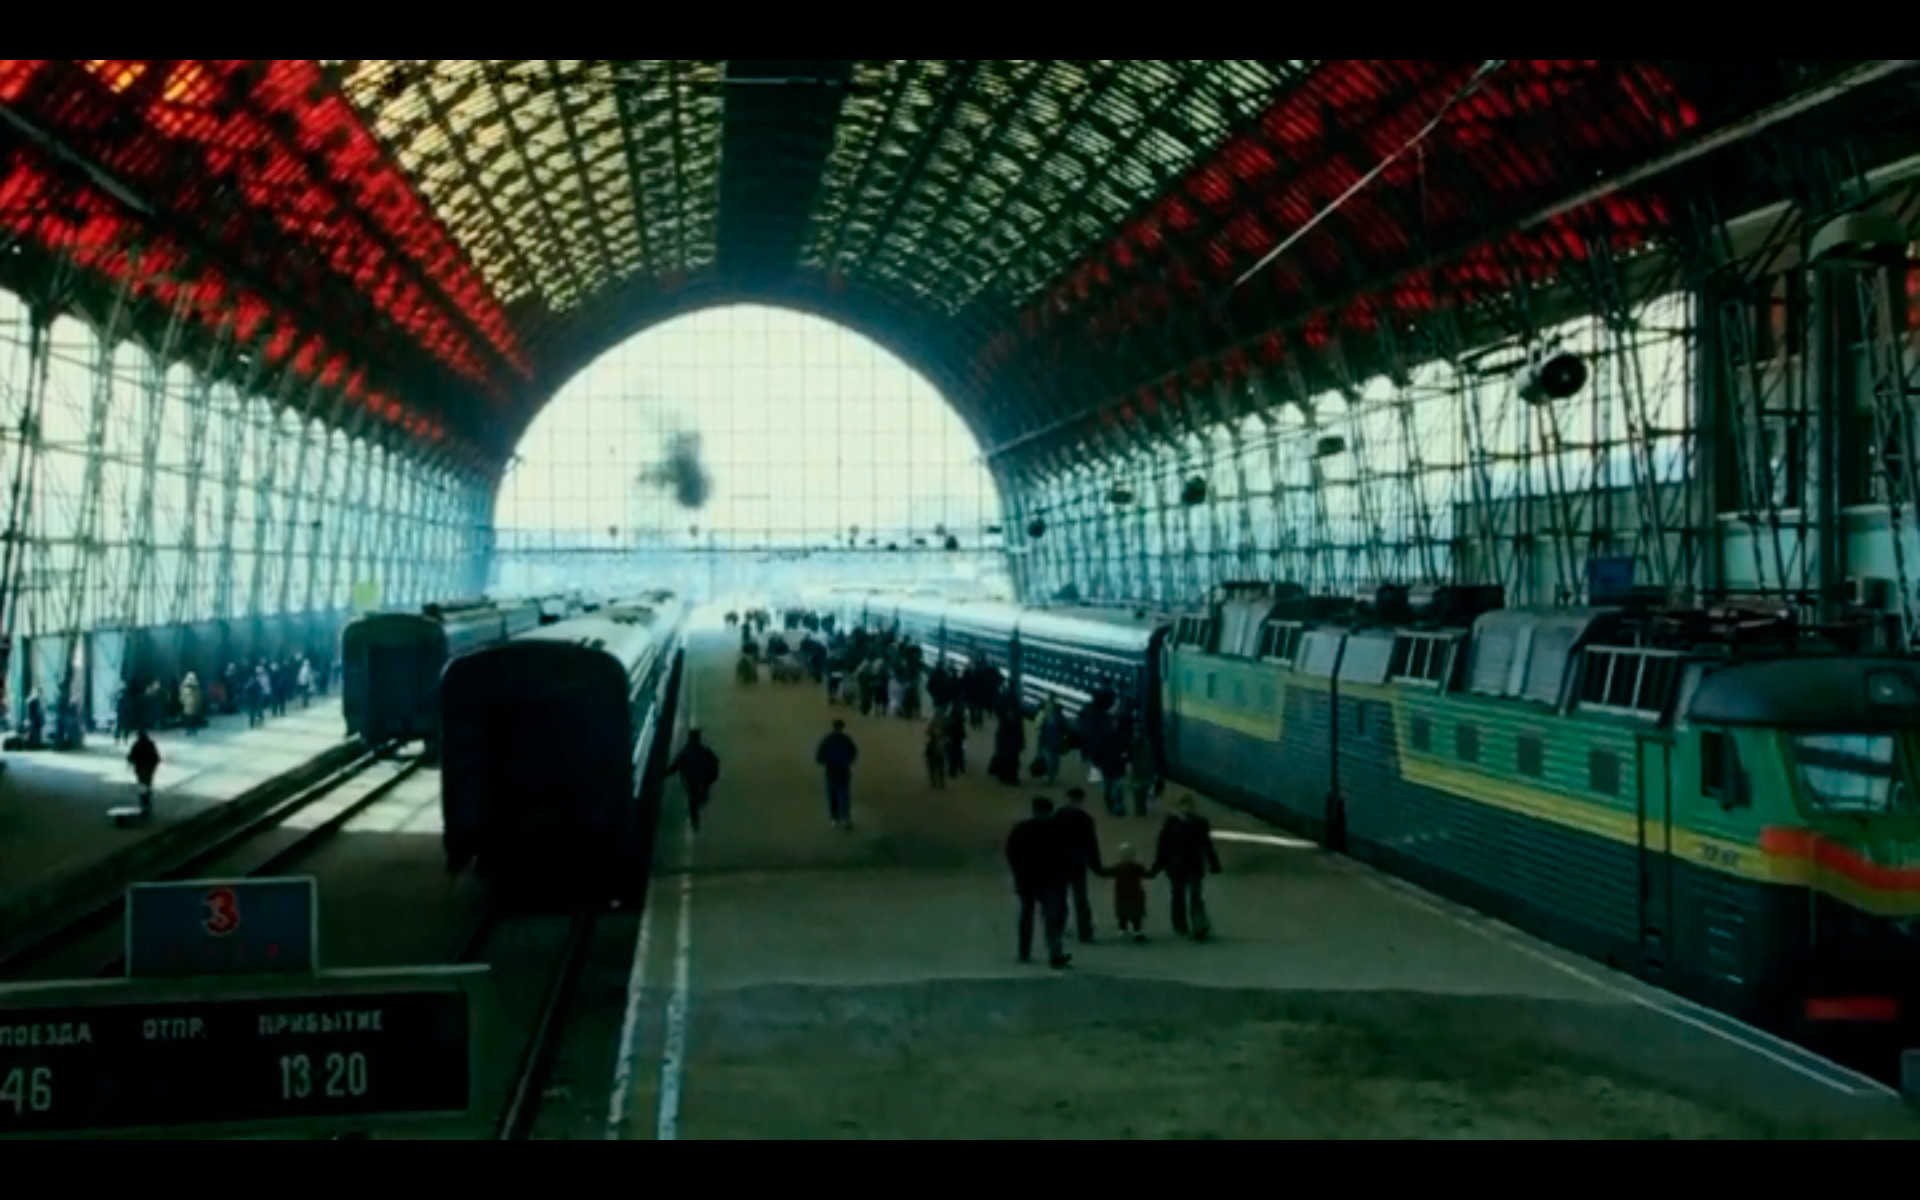 The real Kievsky Railway station where Bourne arrives circa 2004